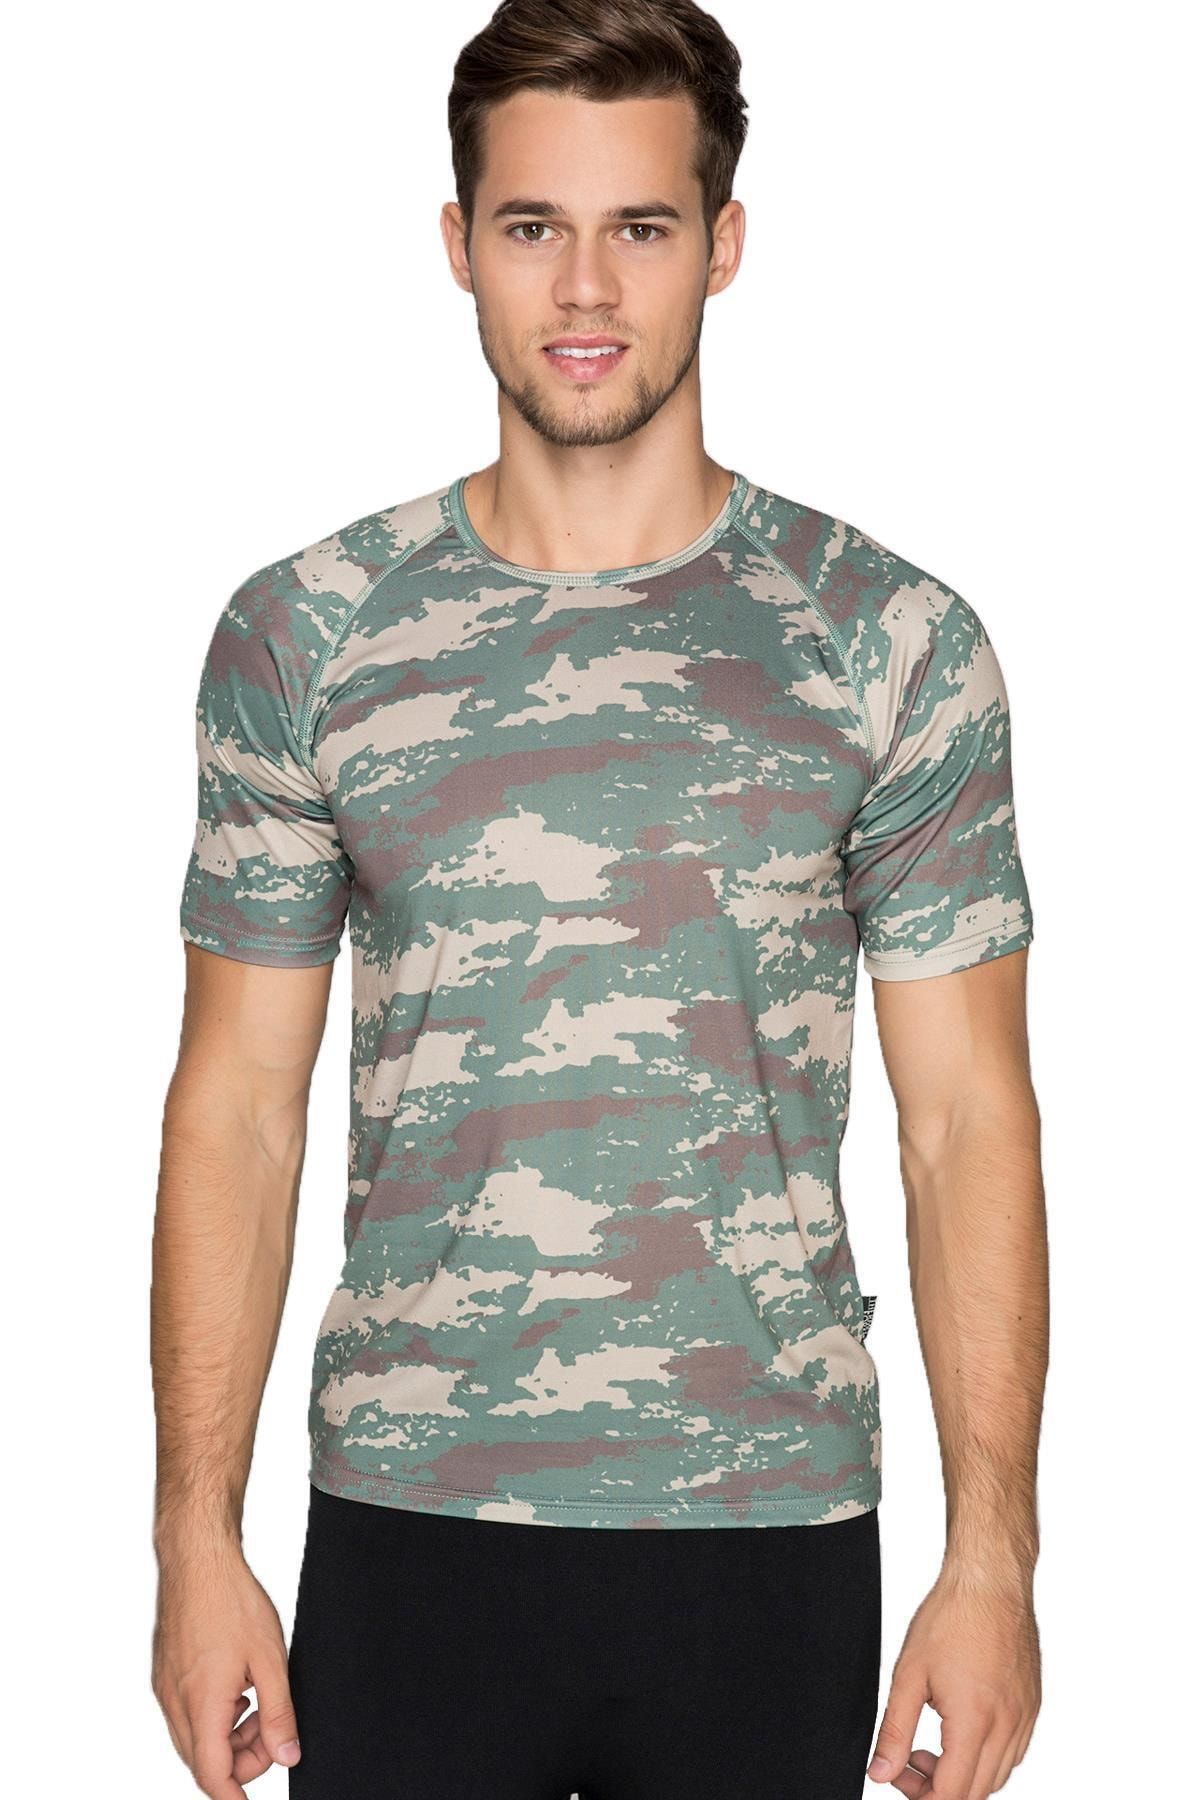 Thermoform Erkek Termal T-shirt Yeşil (Hzt1805-ysl)